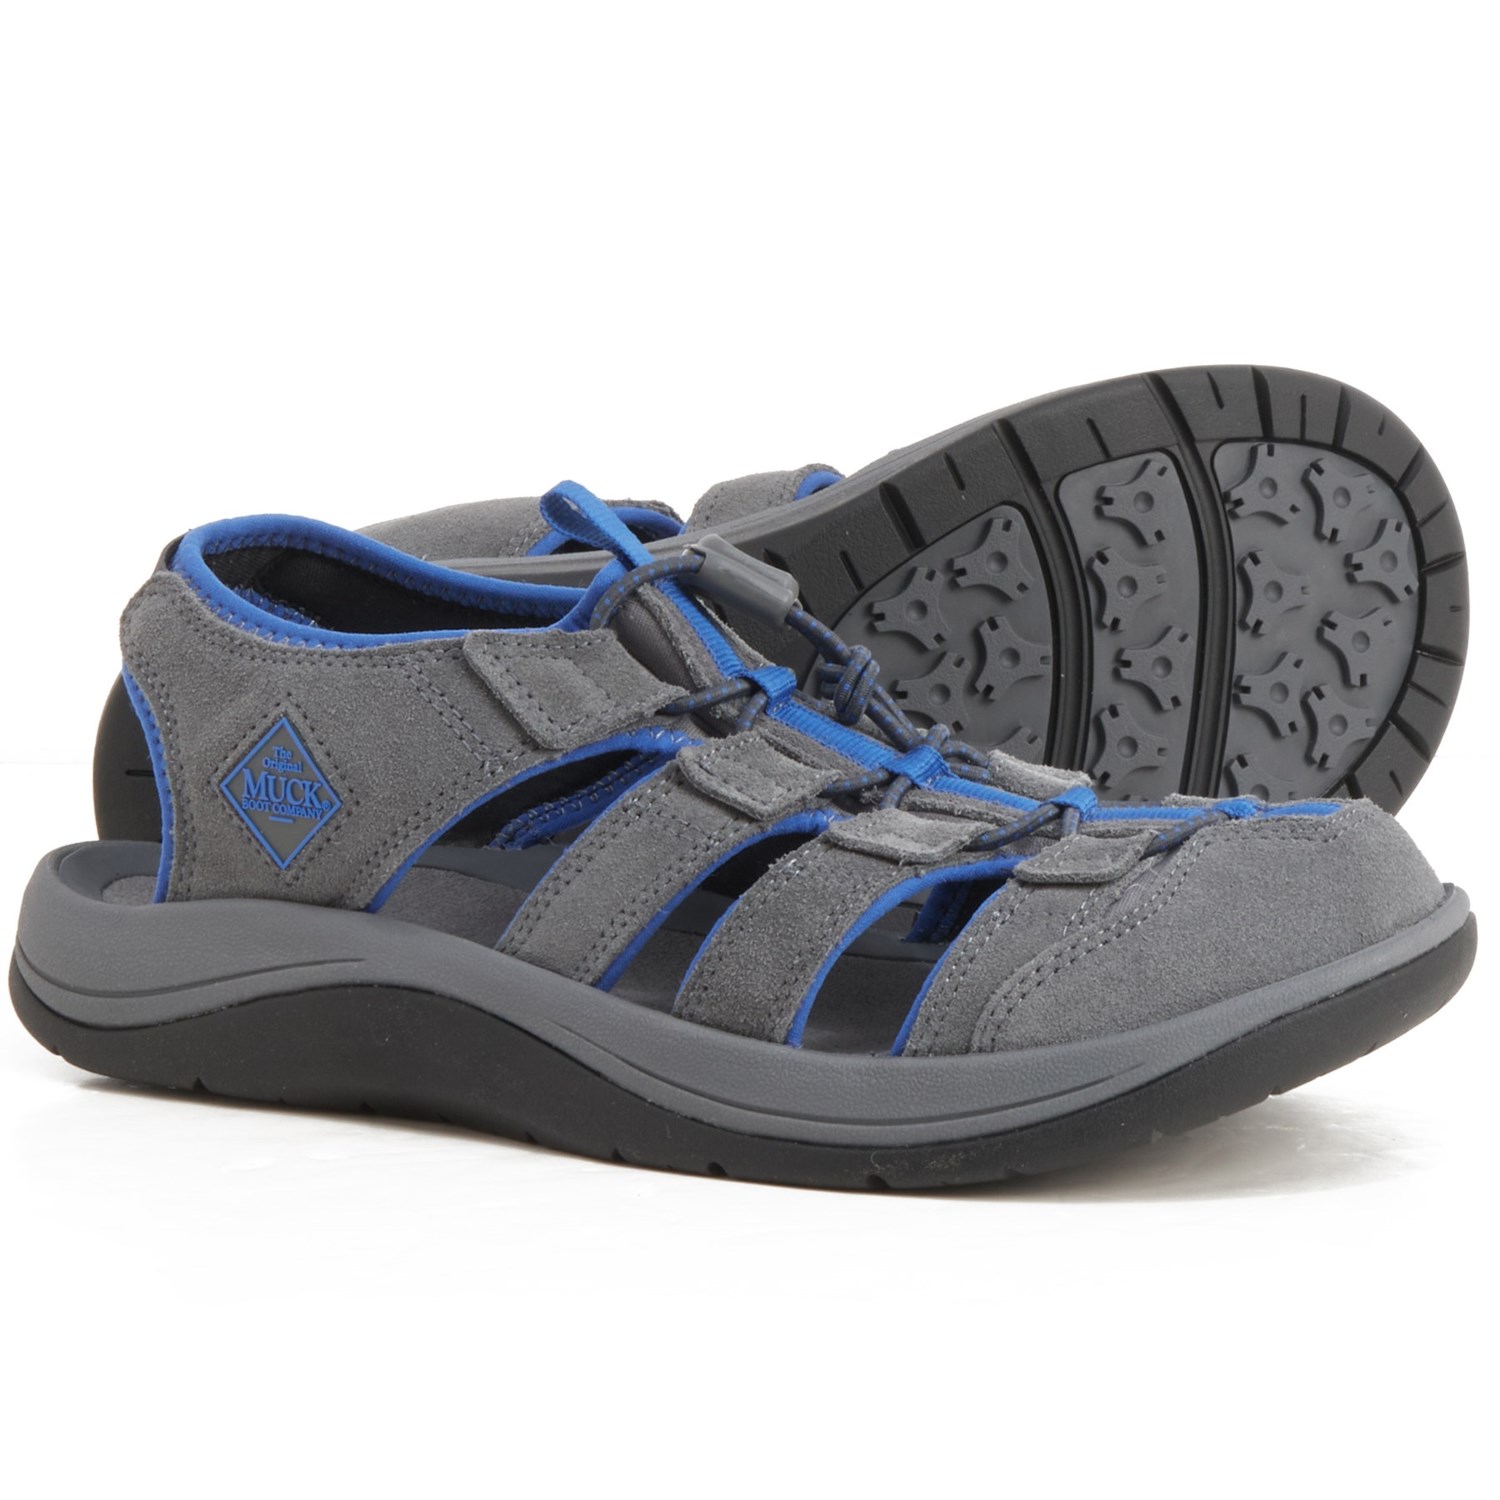 Men's Genuine Leather Fisherman Beach Sports Sandals Waterproof Shoes SIZE 7 8 9 